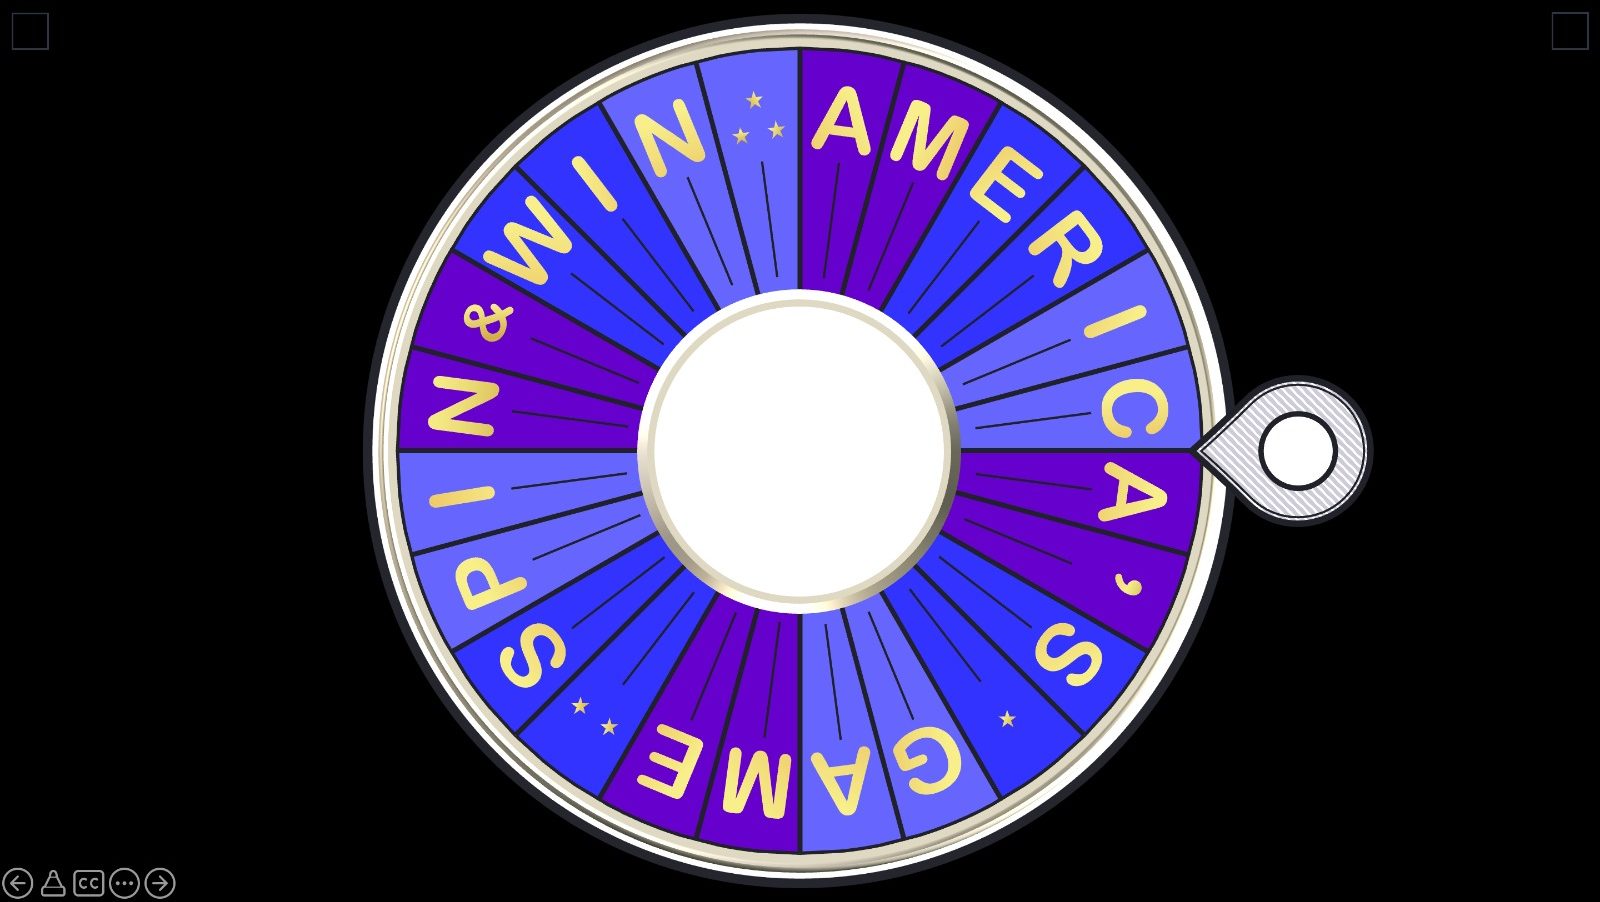 wheel of fortune powepoint templates